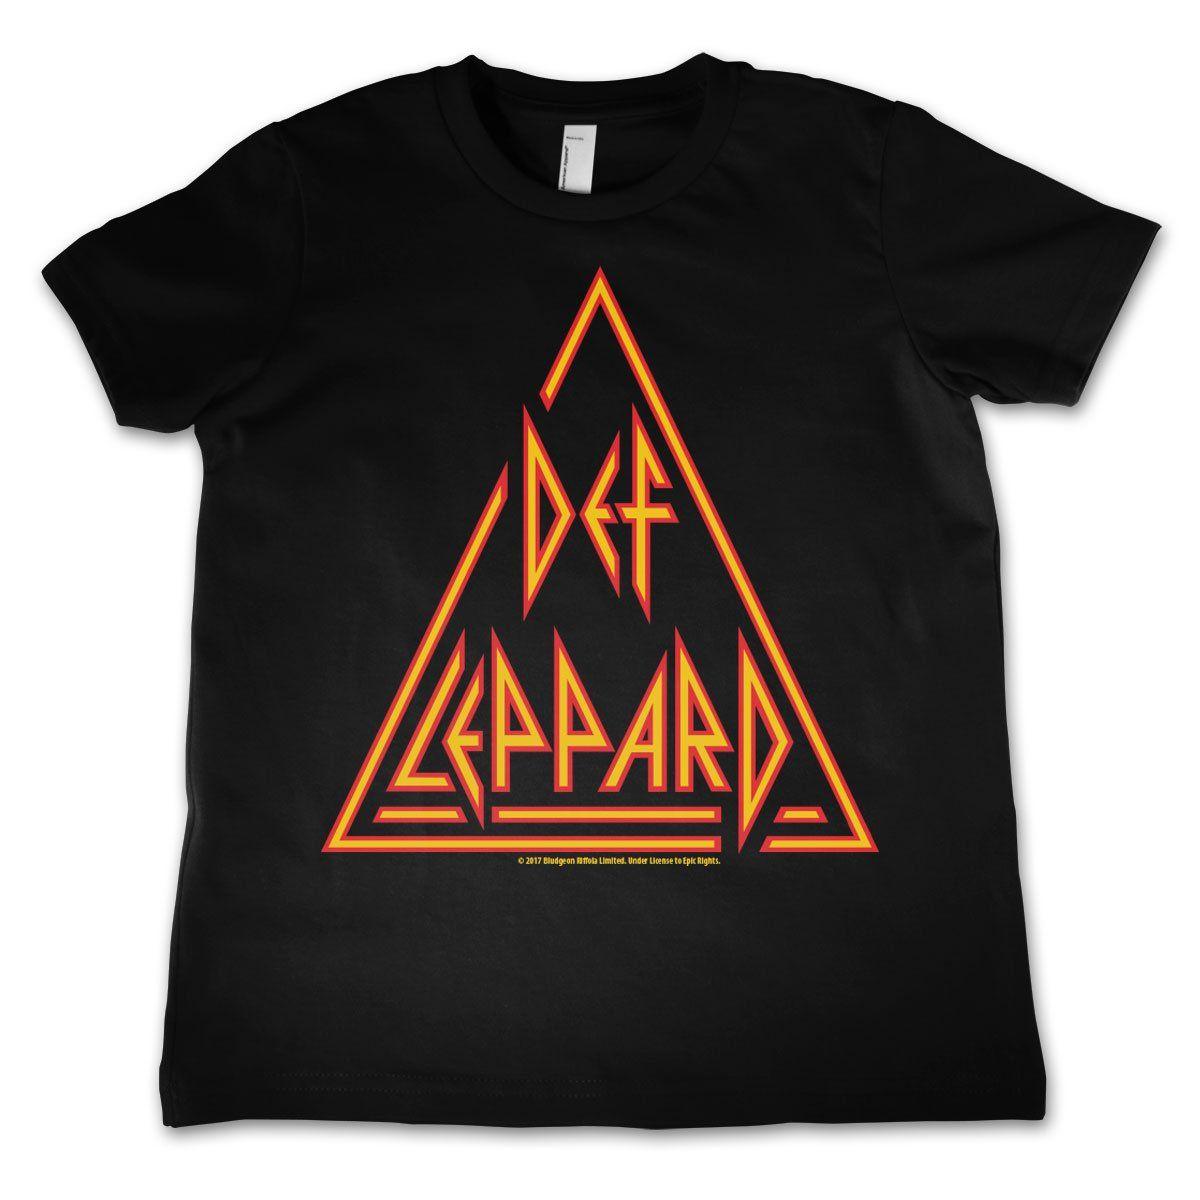 Def Leppard Logo - Amazon.com: Def Leppard Logo Unisex Official Kids T Shirts Ages 3-12 ...